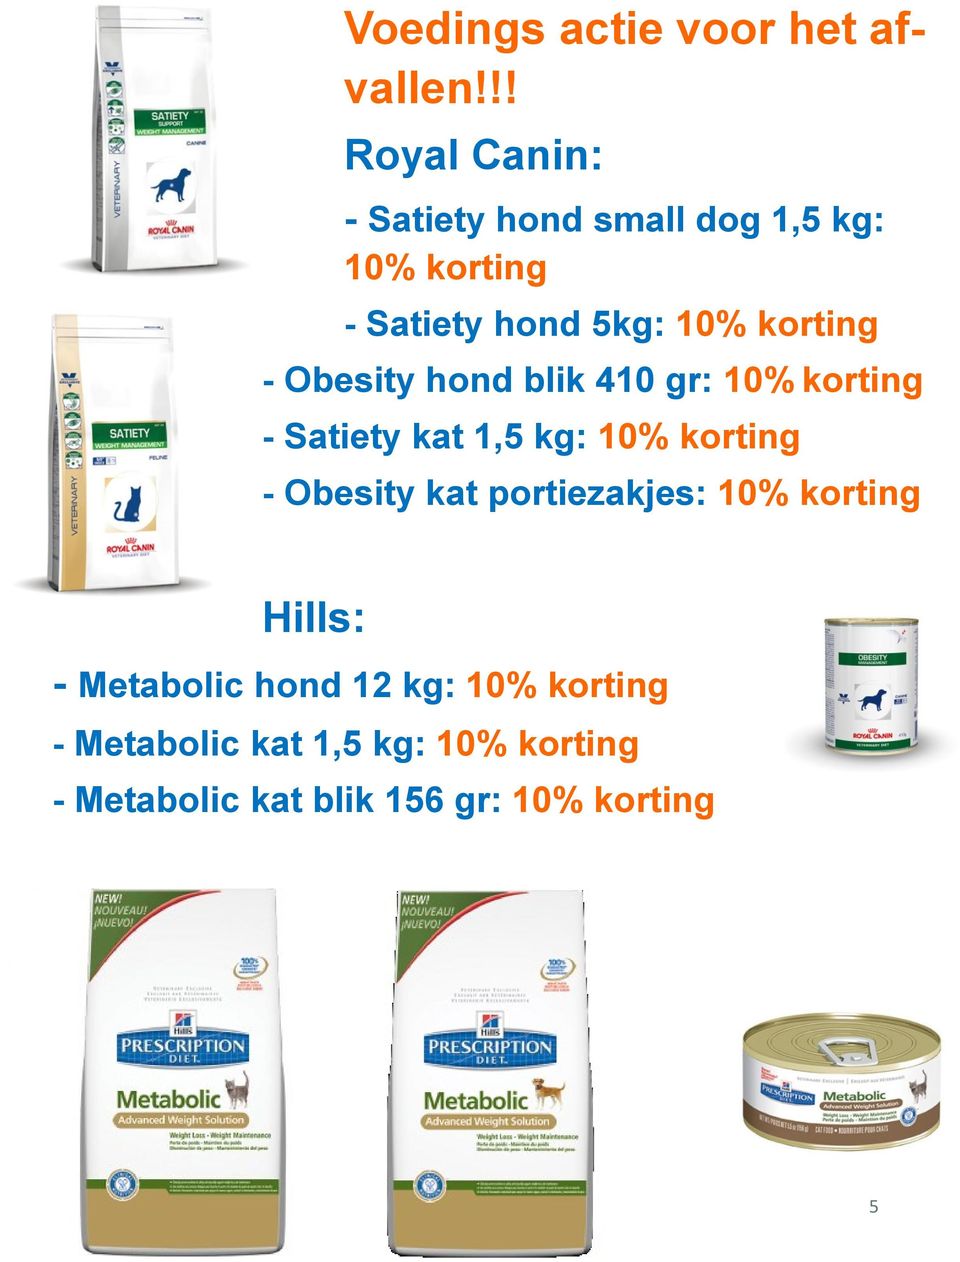 korting - Obesity hond blik 410 gr: 10% korting - Satiety kat 1,5 kg: 10% korting -